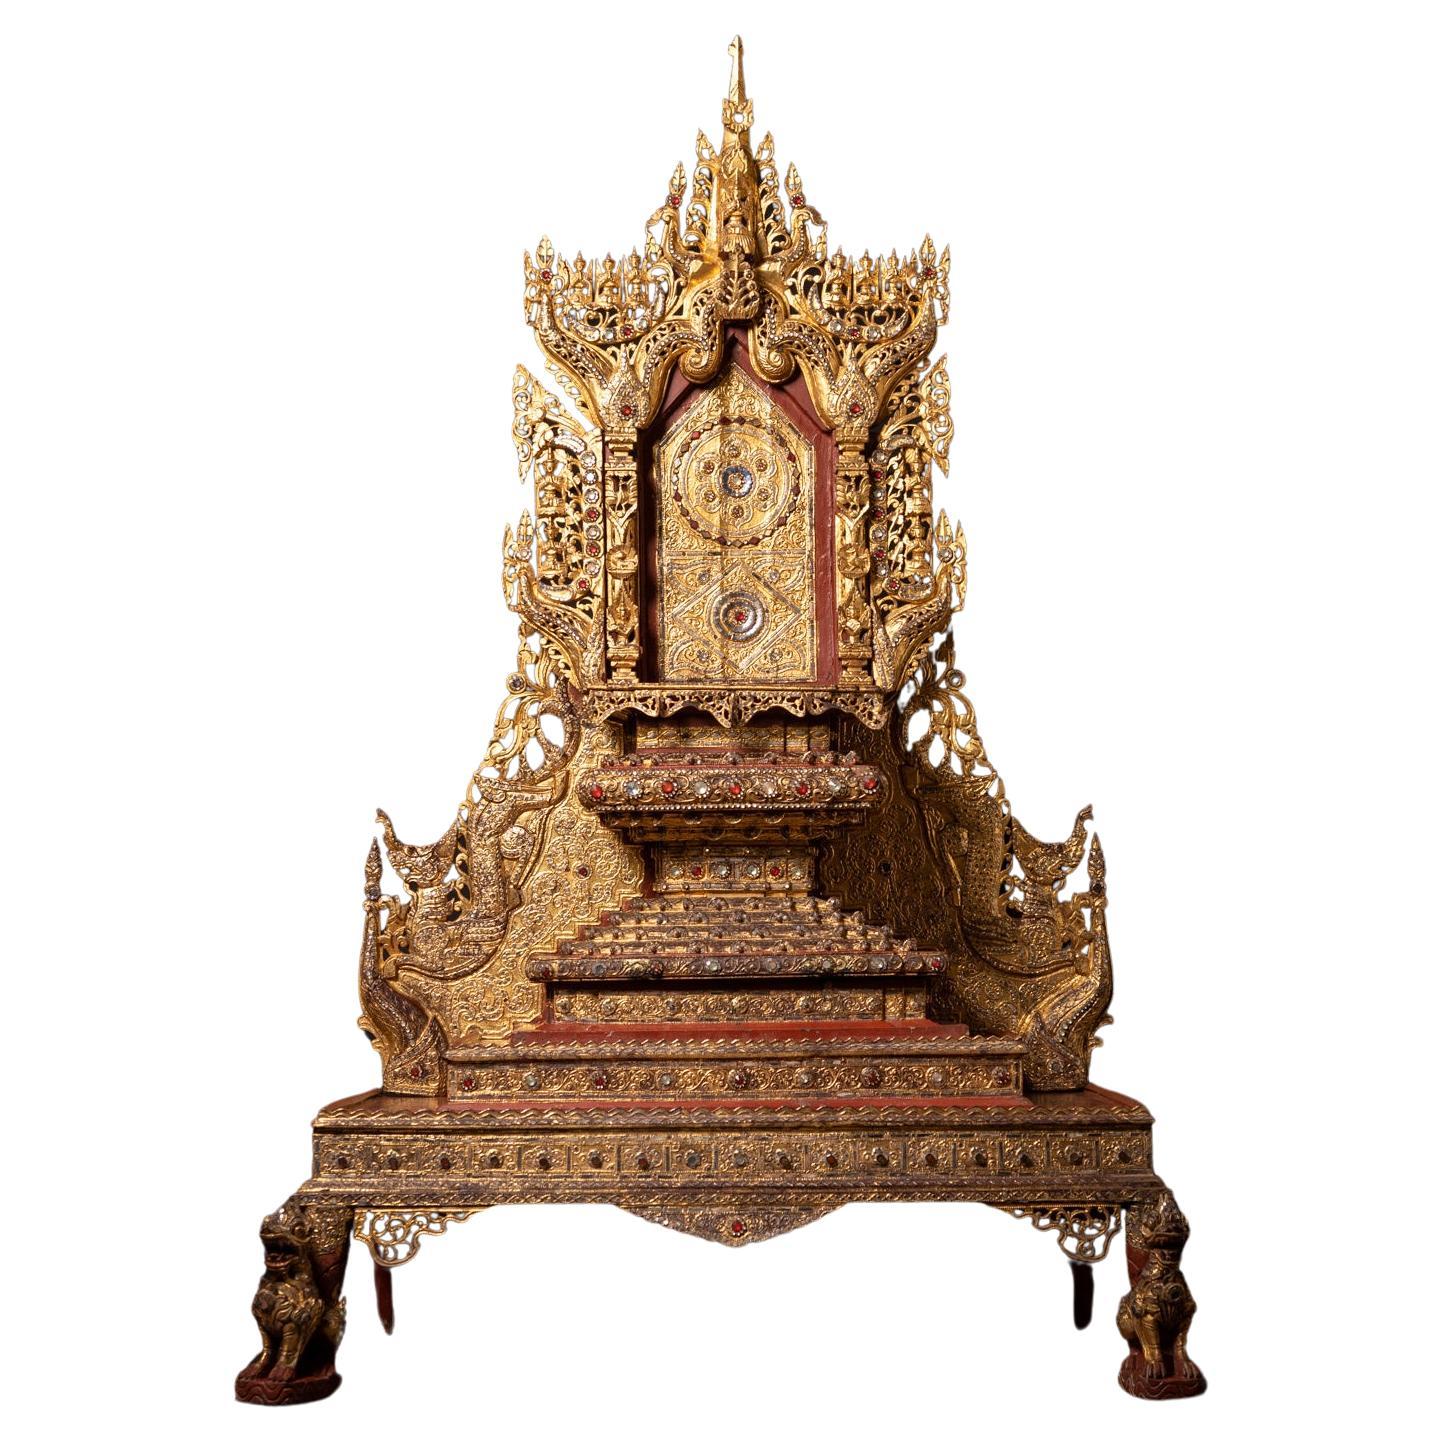 Großer antiker burmesischer Thron aus Burma aus dem 19. Jahrhundert